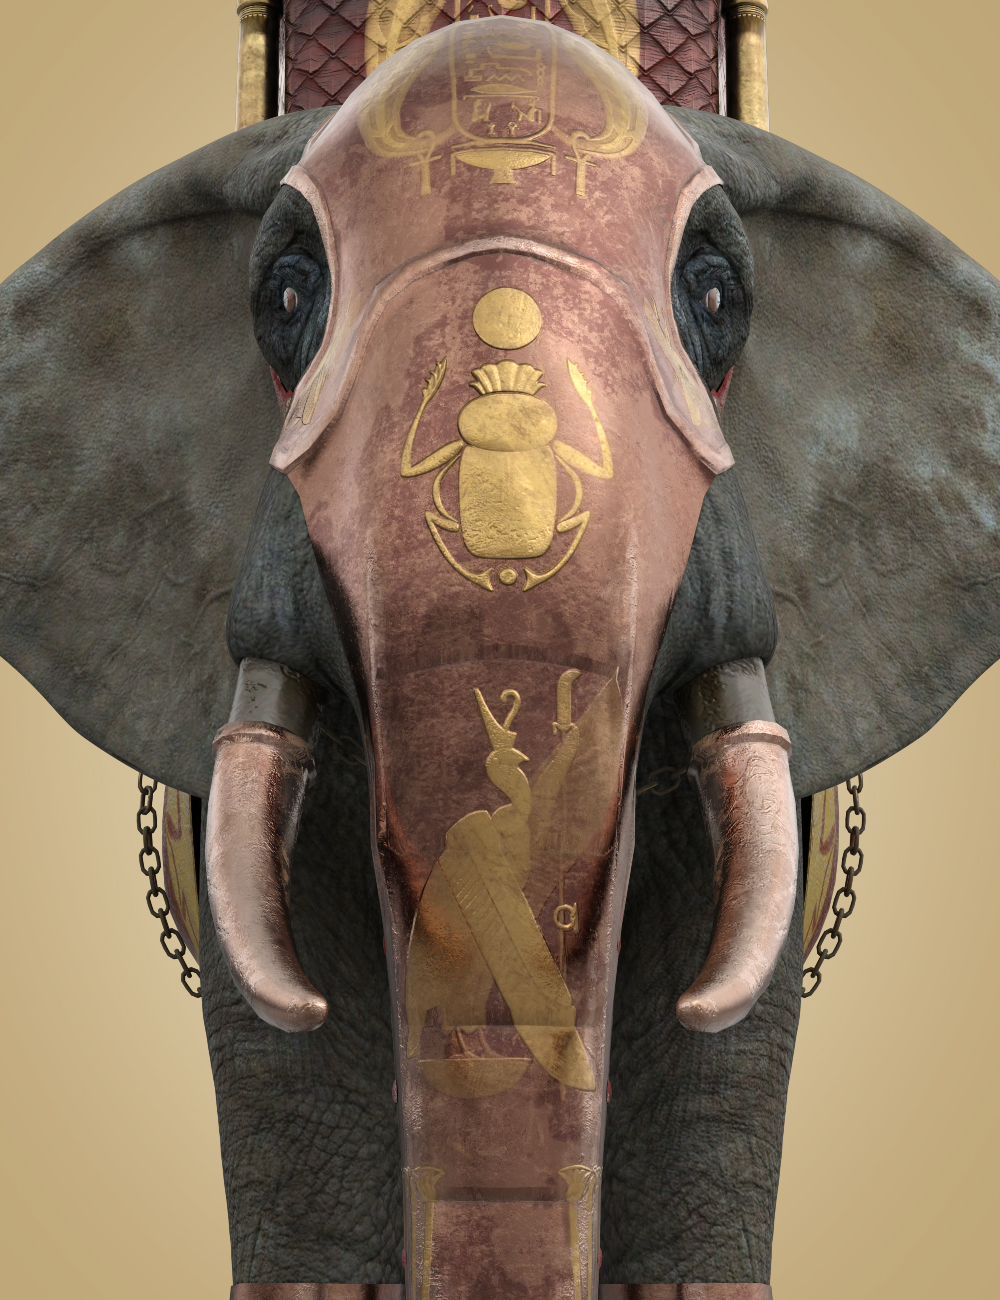 Egyptian Elephant Warrior for African Elephant by: Deepsea, 3D Models by Daz 3D